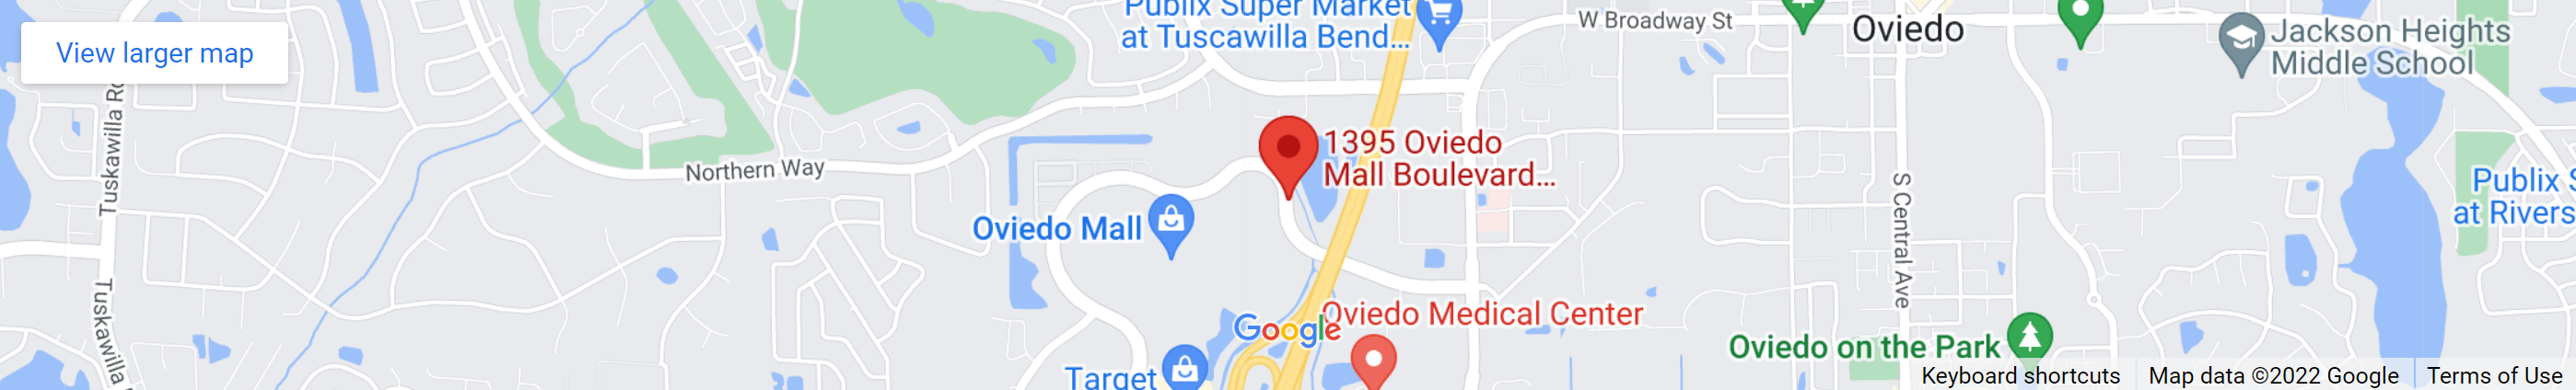 1395 Oviedo Mall Boulevard, Oviedo, FL 32765